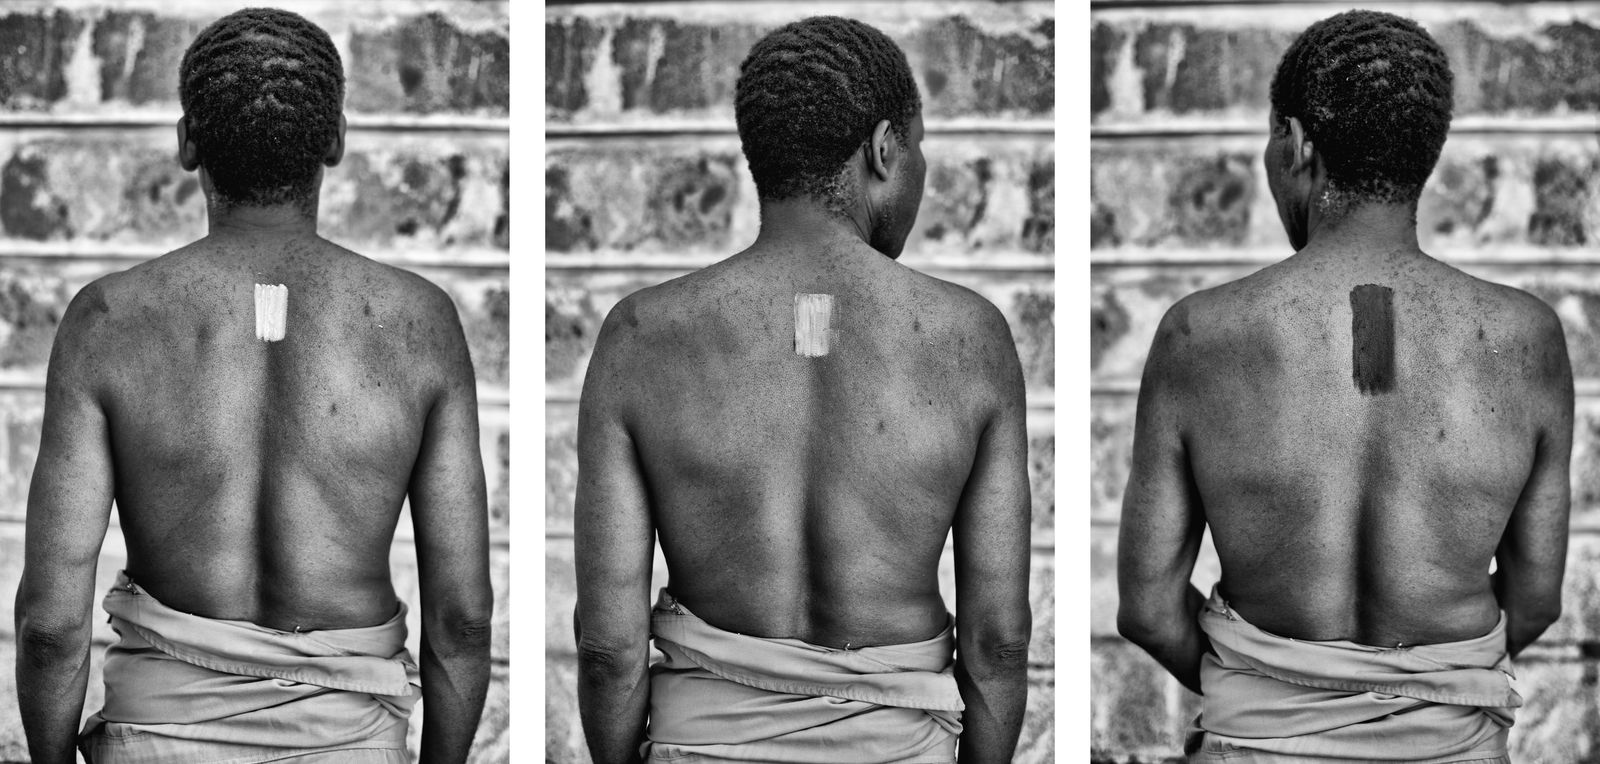 © Nura Qureshi - "Prisoner Markings" Nairobi, Kenya 2018